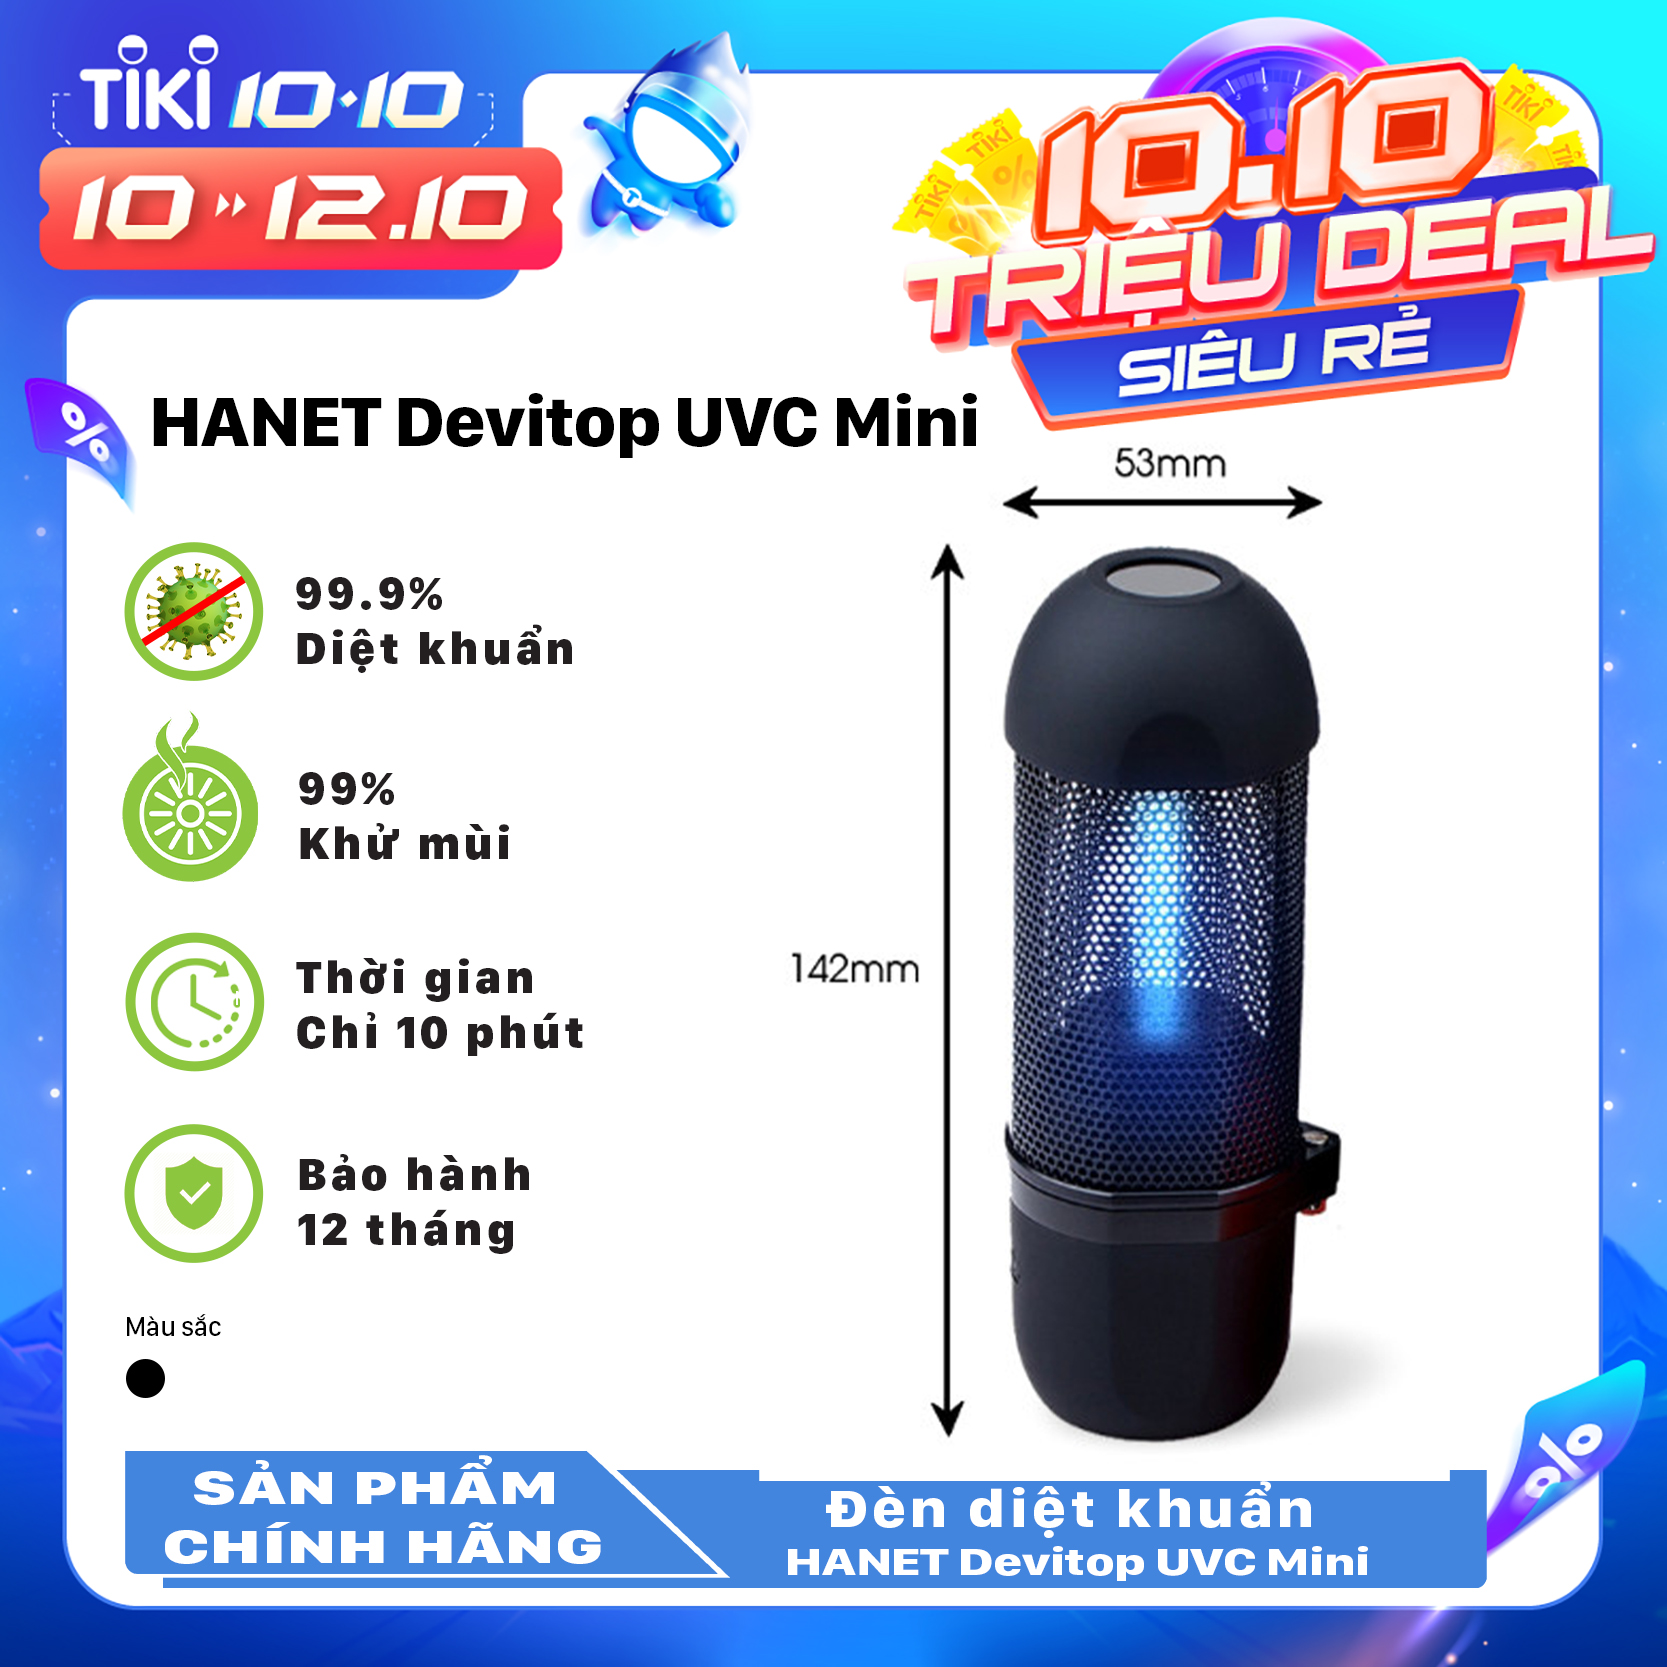 Đèn diệt khuẩn HANET Devitop UVC Mini